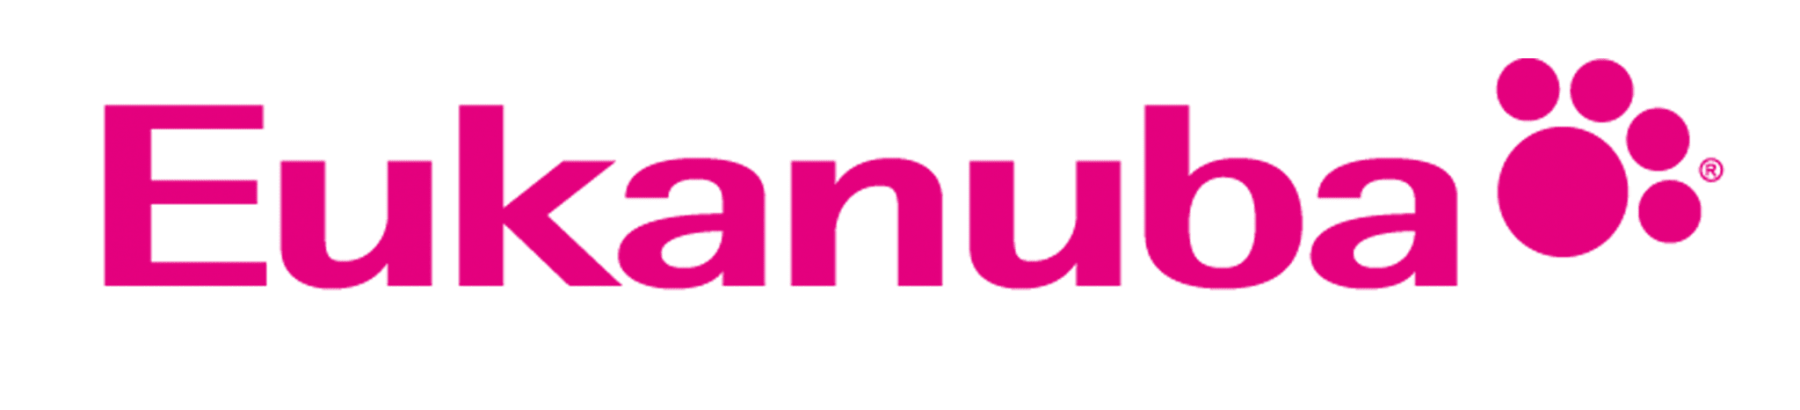 eukanuba_logo